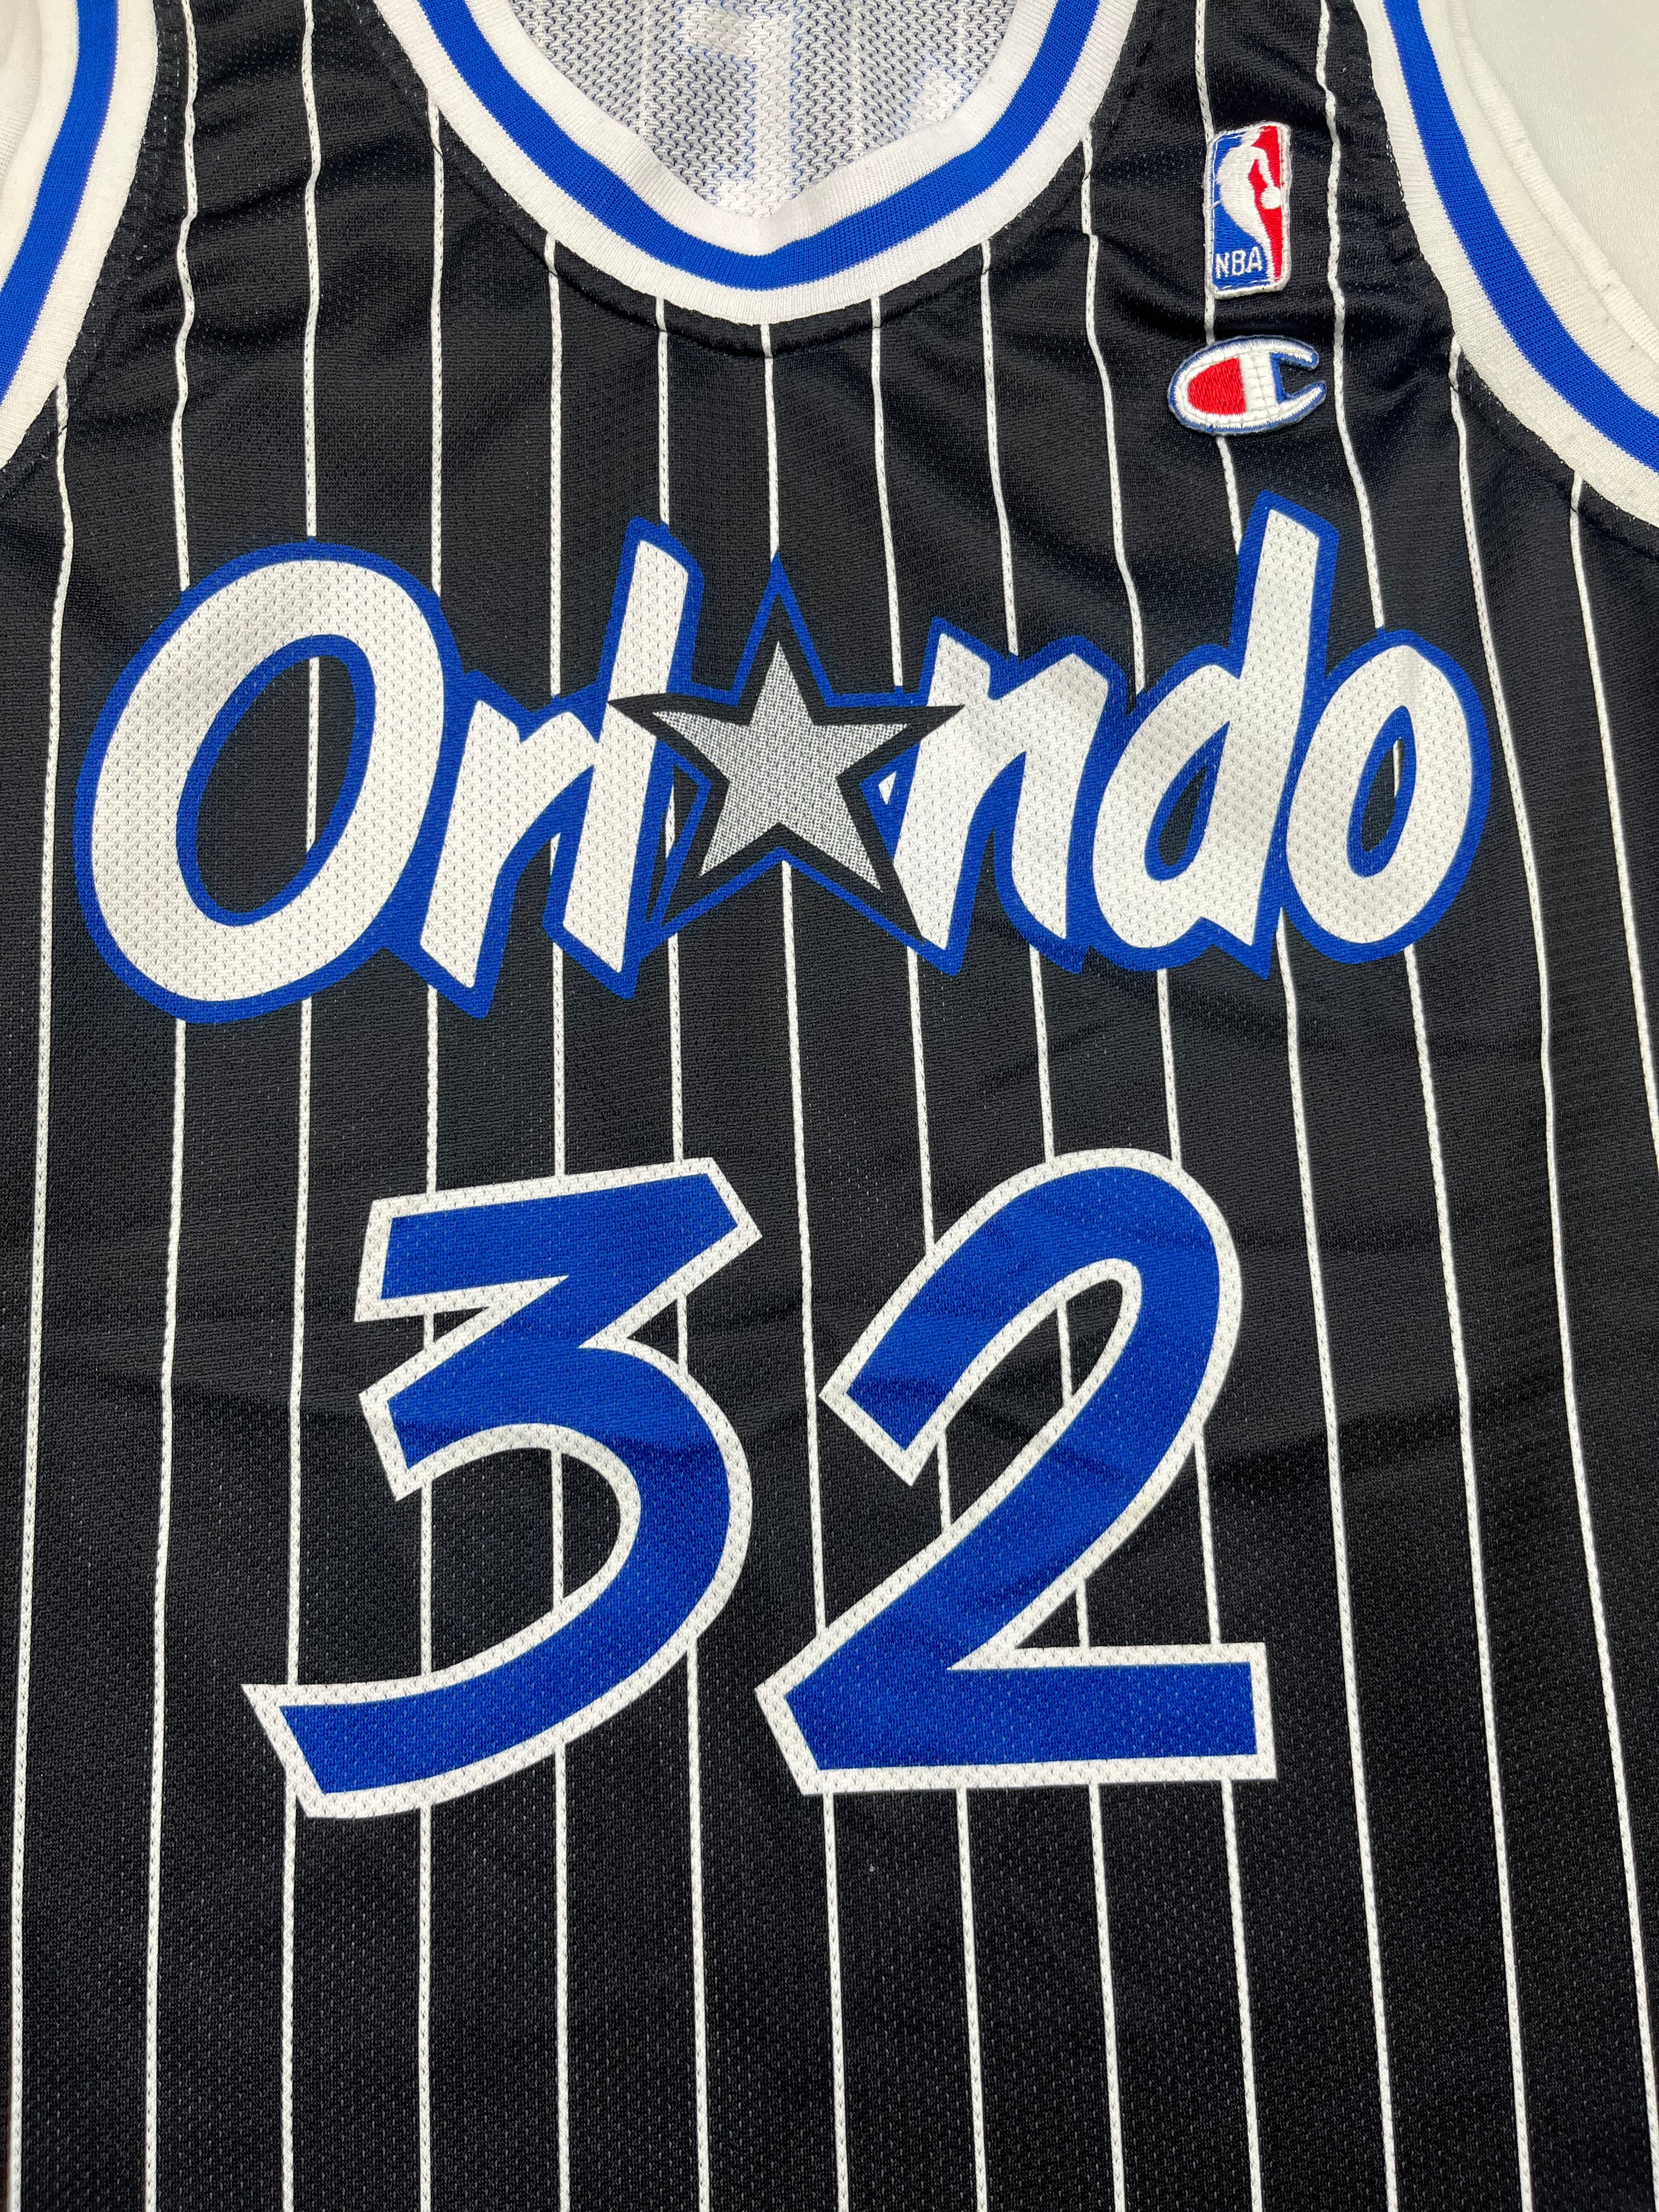 1992/96 Orlando Magic Champion Alternate Jersey O’Neal #32 (M)